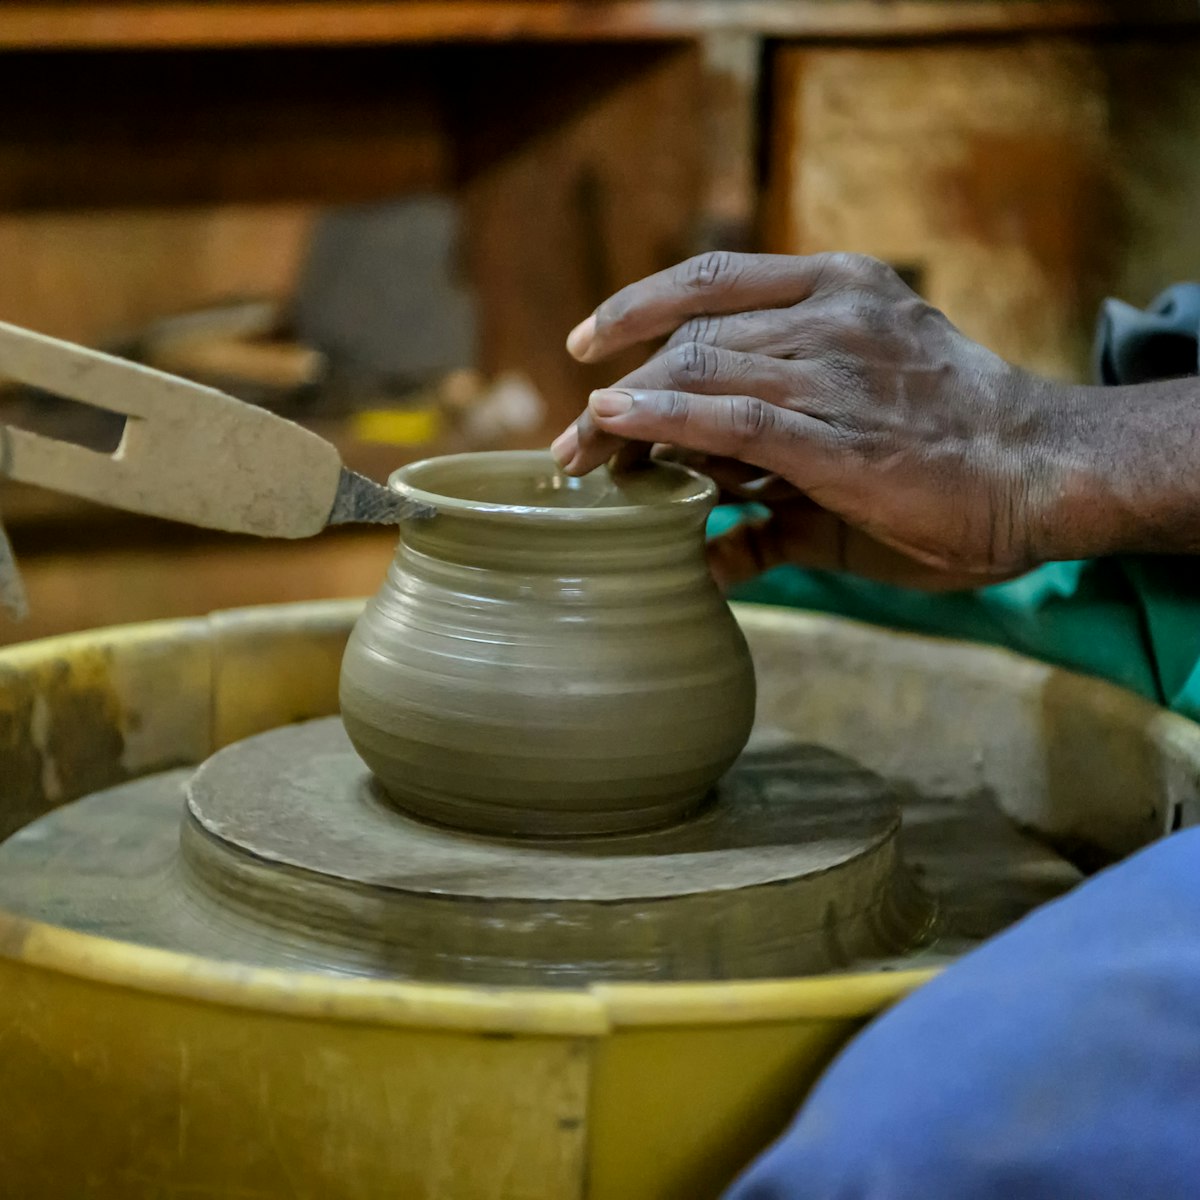 Making pottery at Kazuri Bead Factory, Nairobi, Kenya, East Africa
1045644384
making pottery, beads, kazuri bead factory